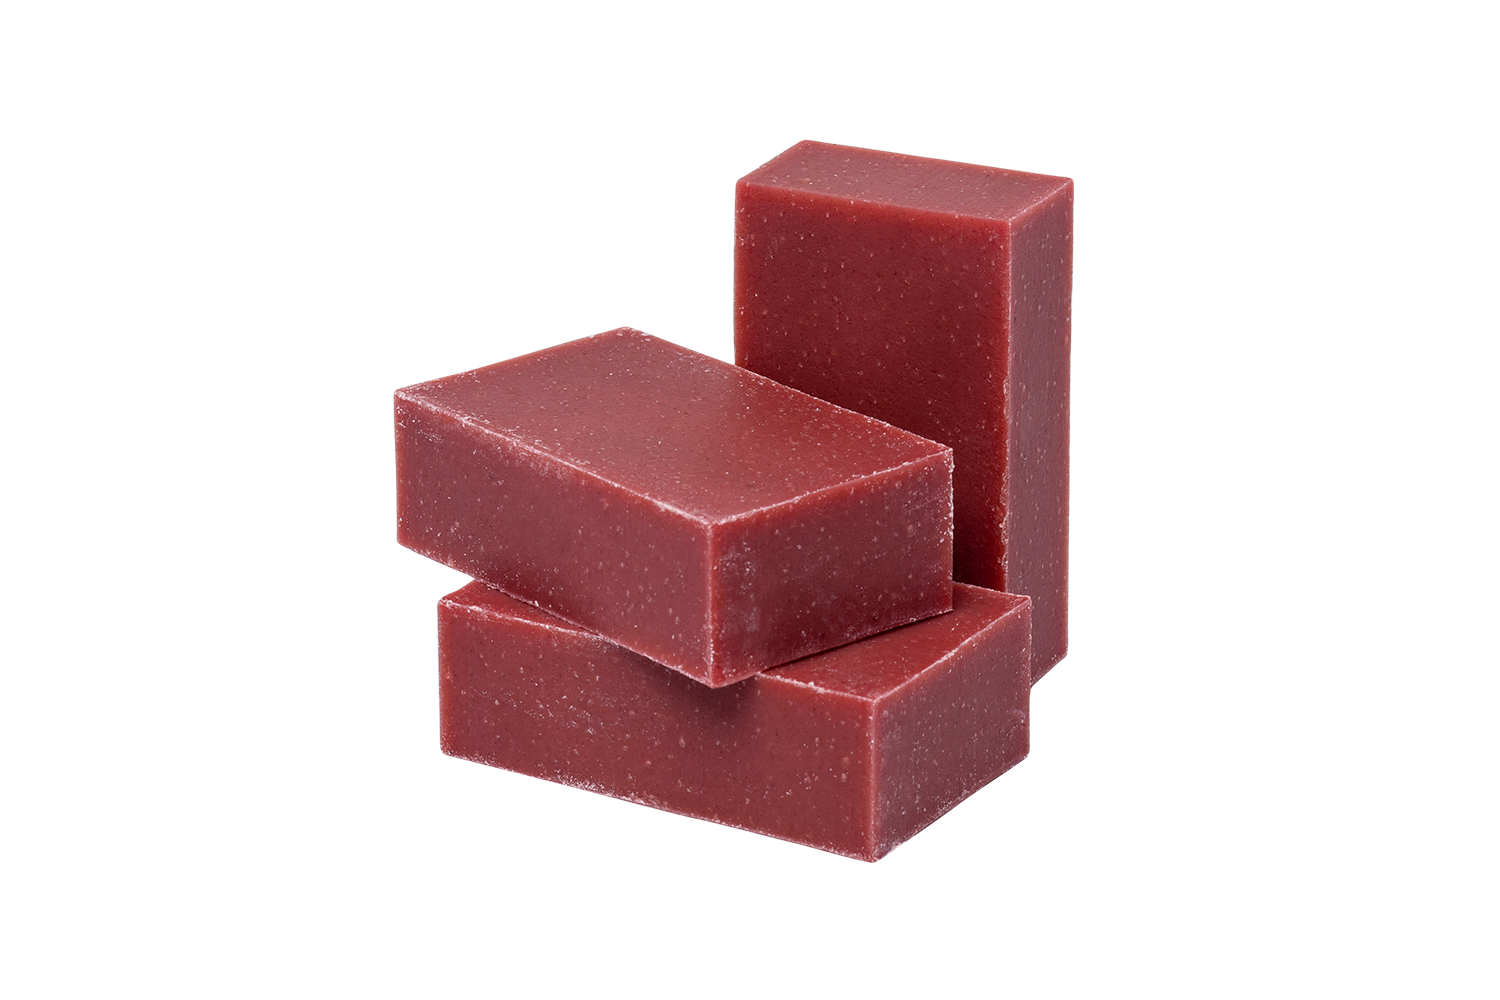 4 oz bars of blood orange soap